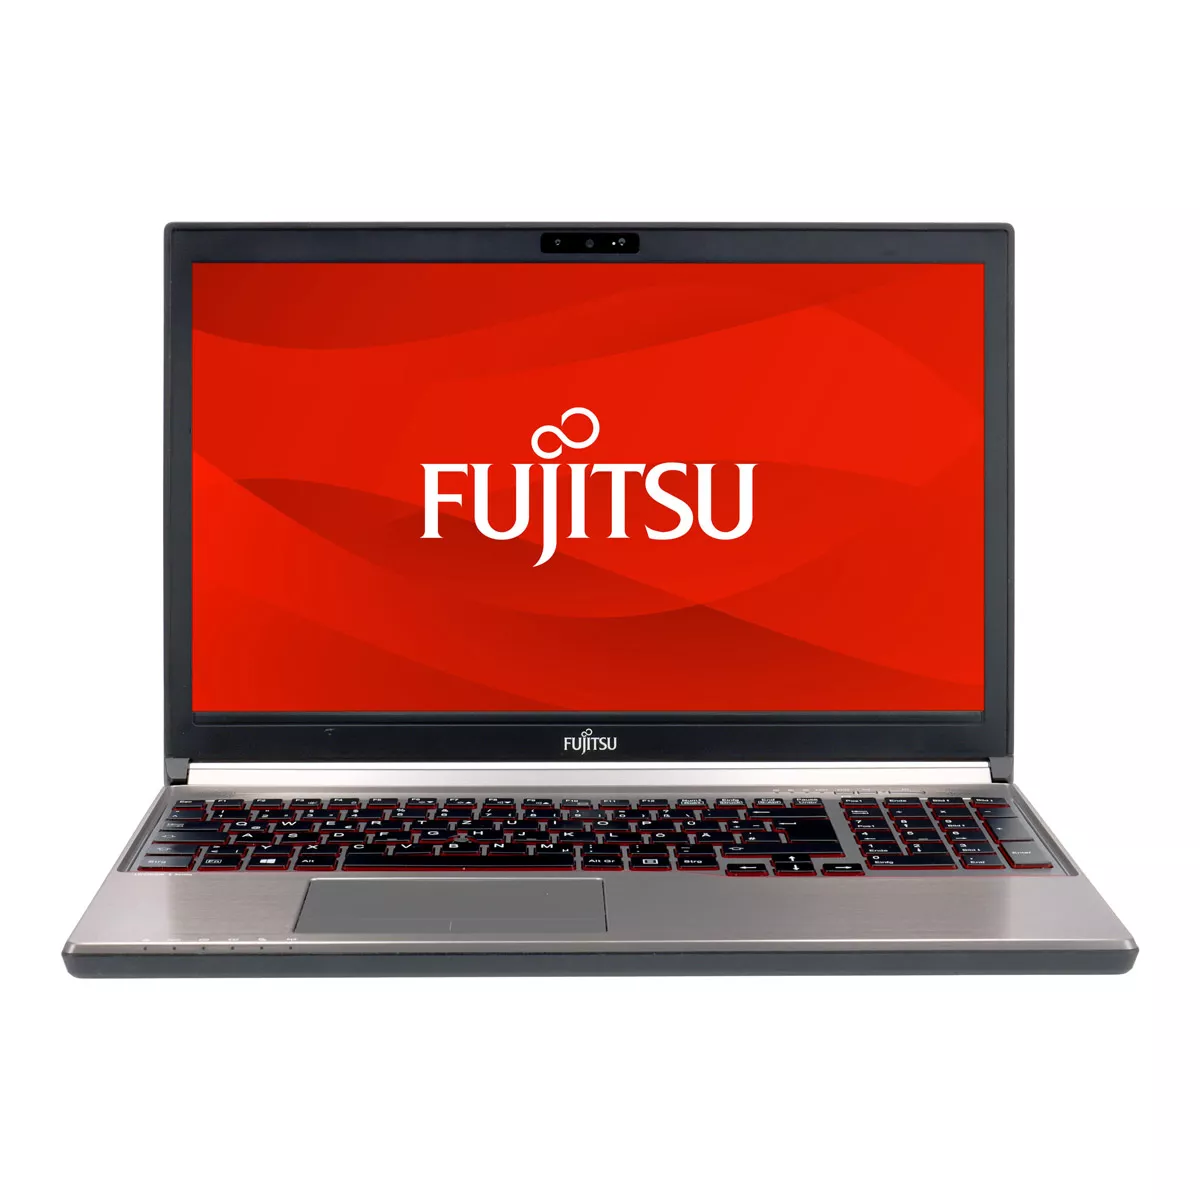 Fujitsu Lifebook E754 Core i5 4310M Full-HD 8 GB 256 GB SSD Webcam A+